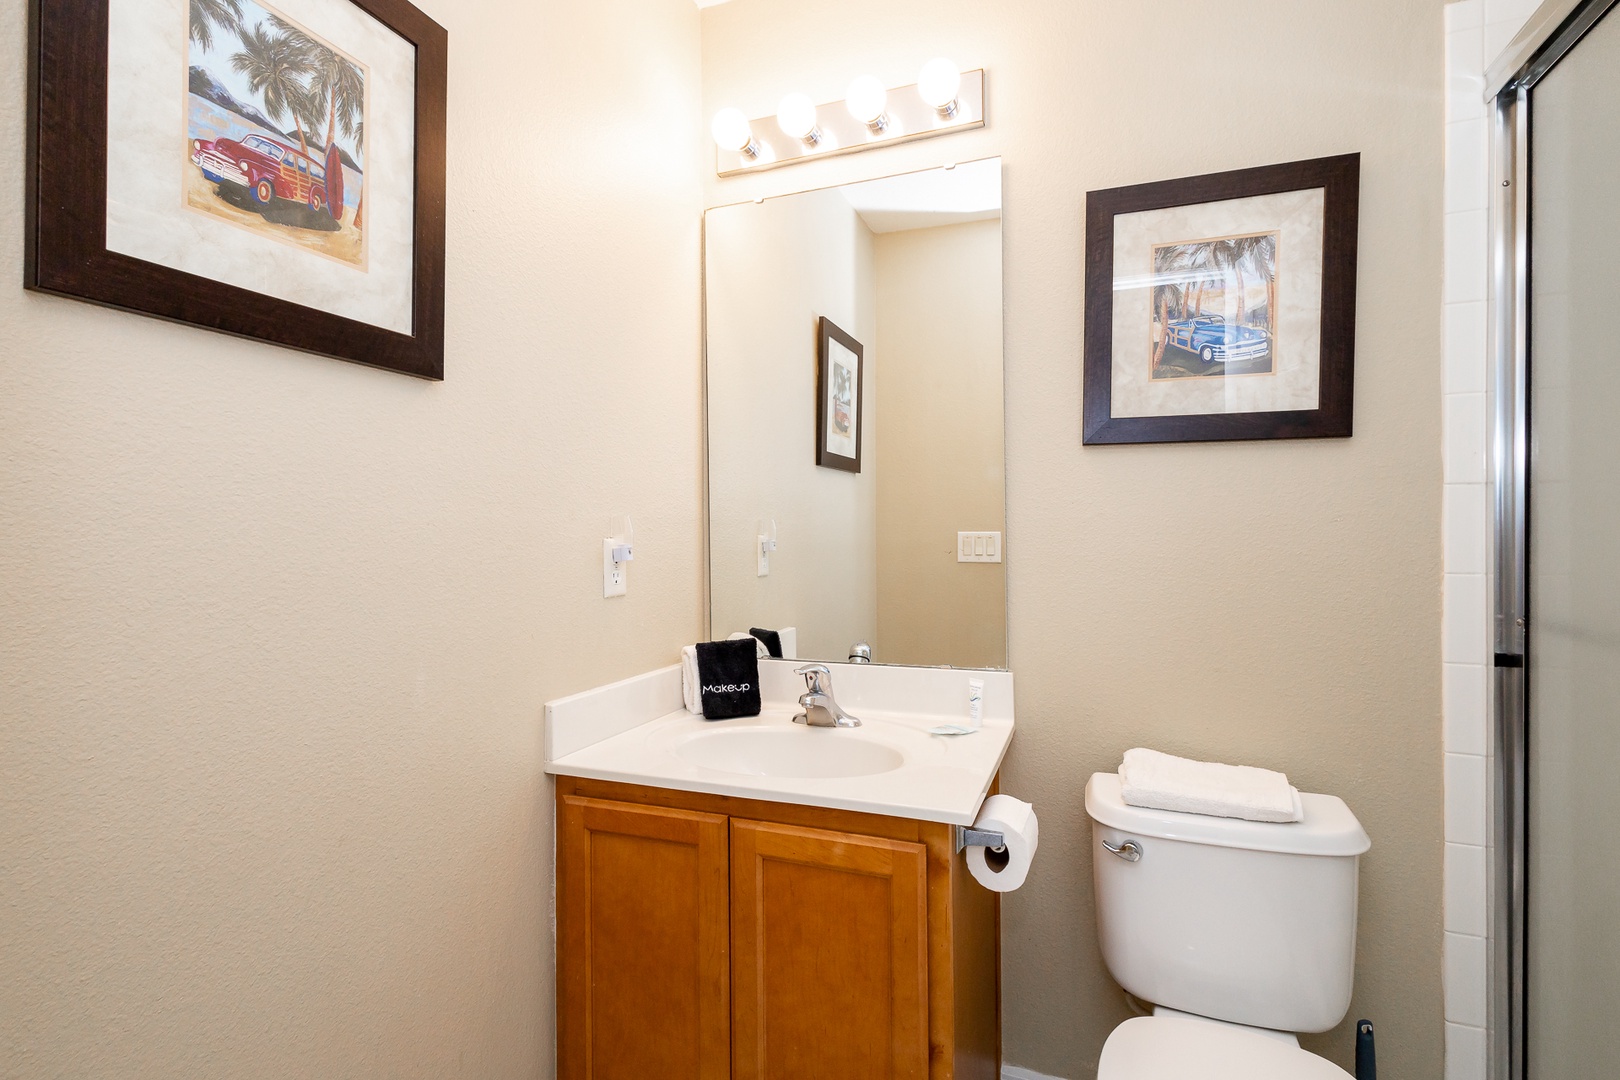 The full en suite bathroom includes a single vanity & glass shower